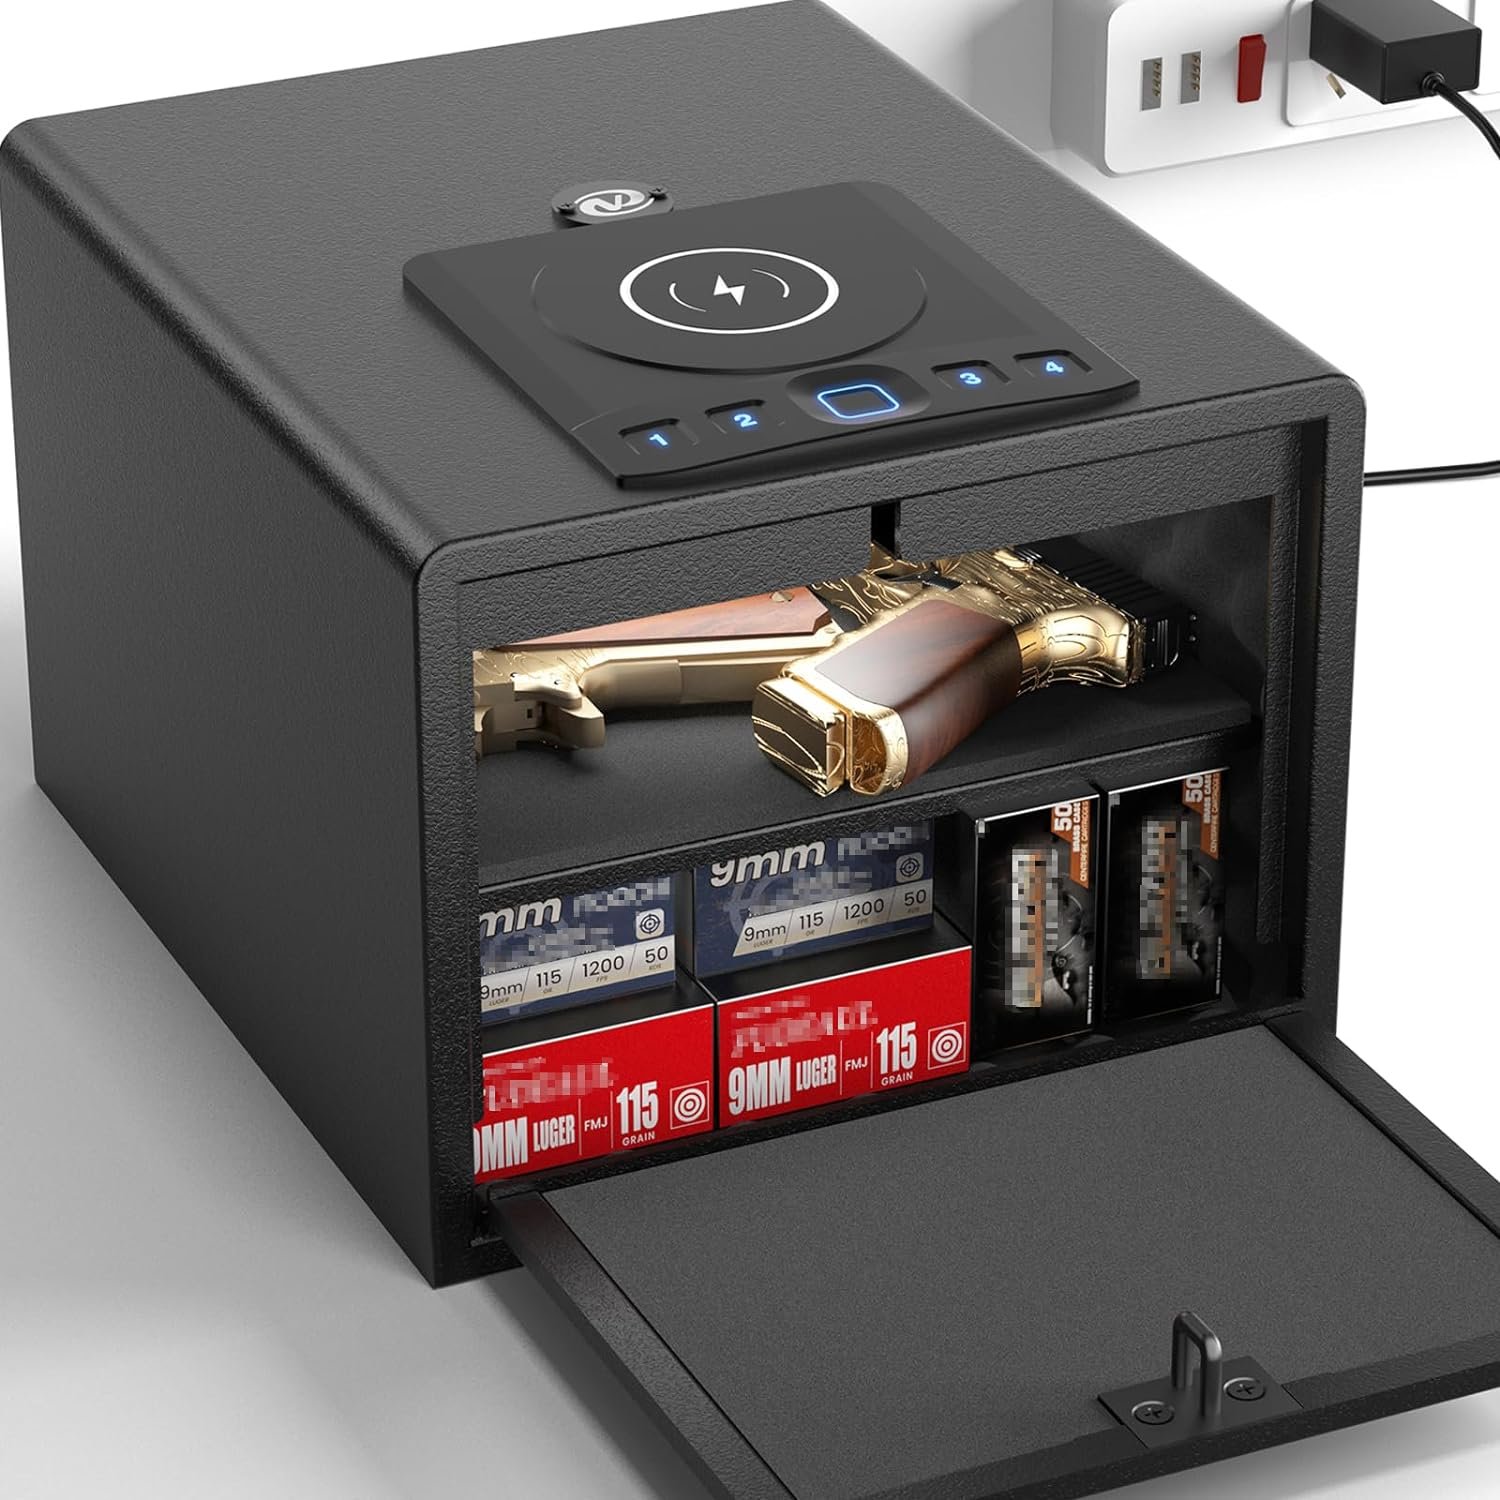 Grimtron Biometric Gun Safe Wireless Charging Review